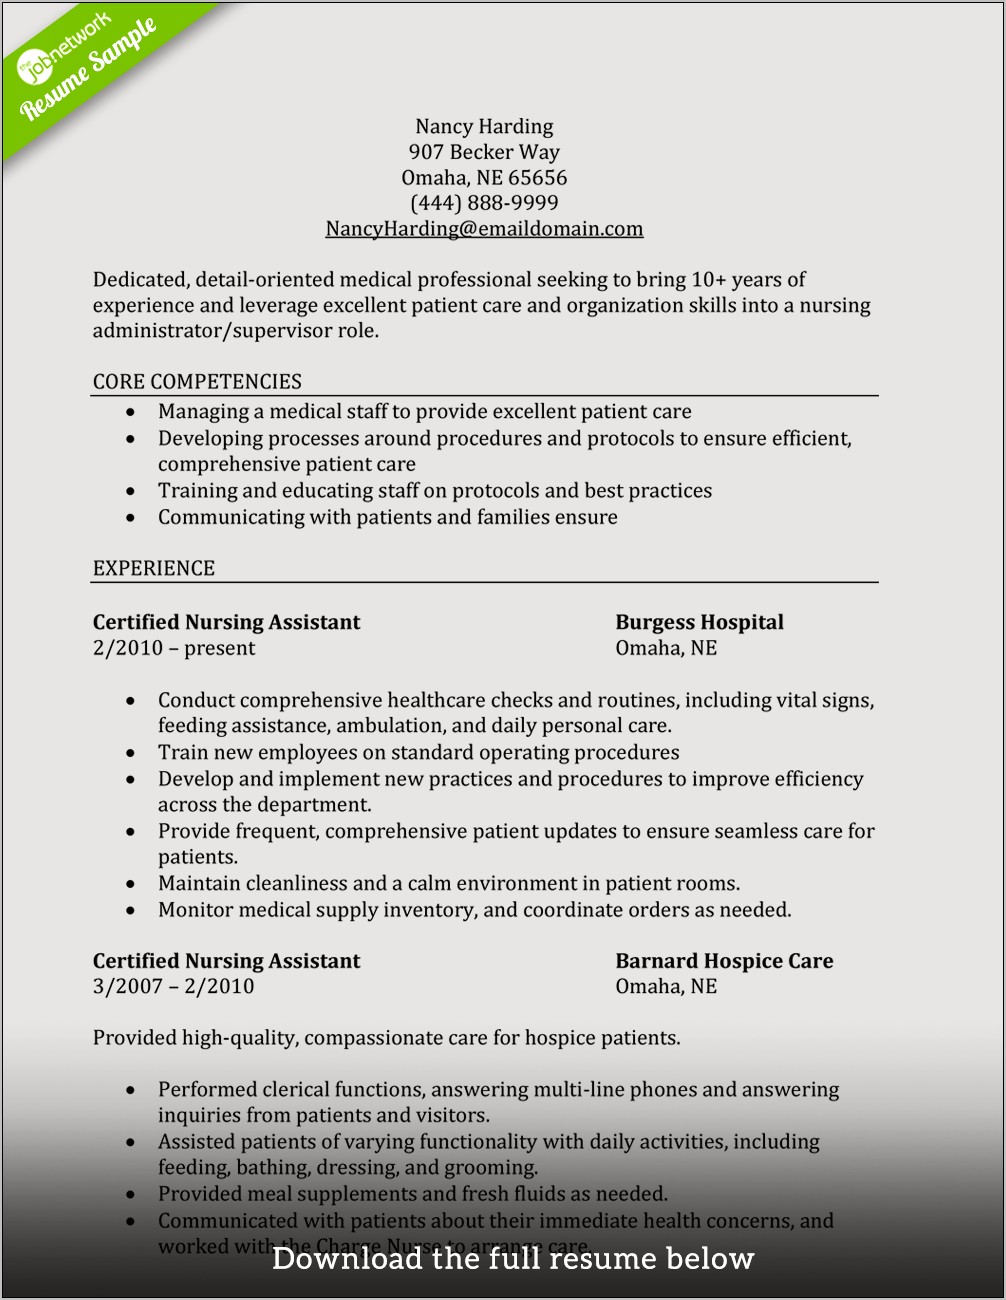 Certified Nursing Assistant Job Resume